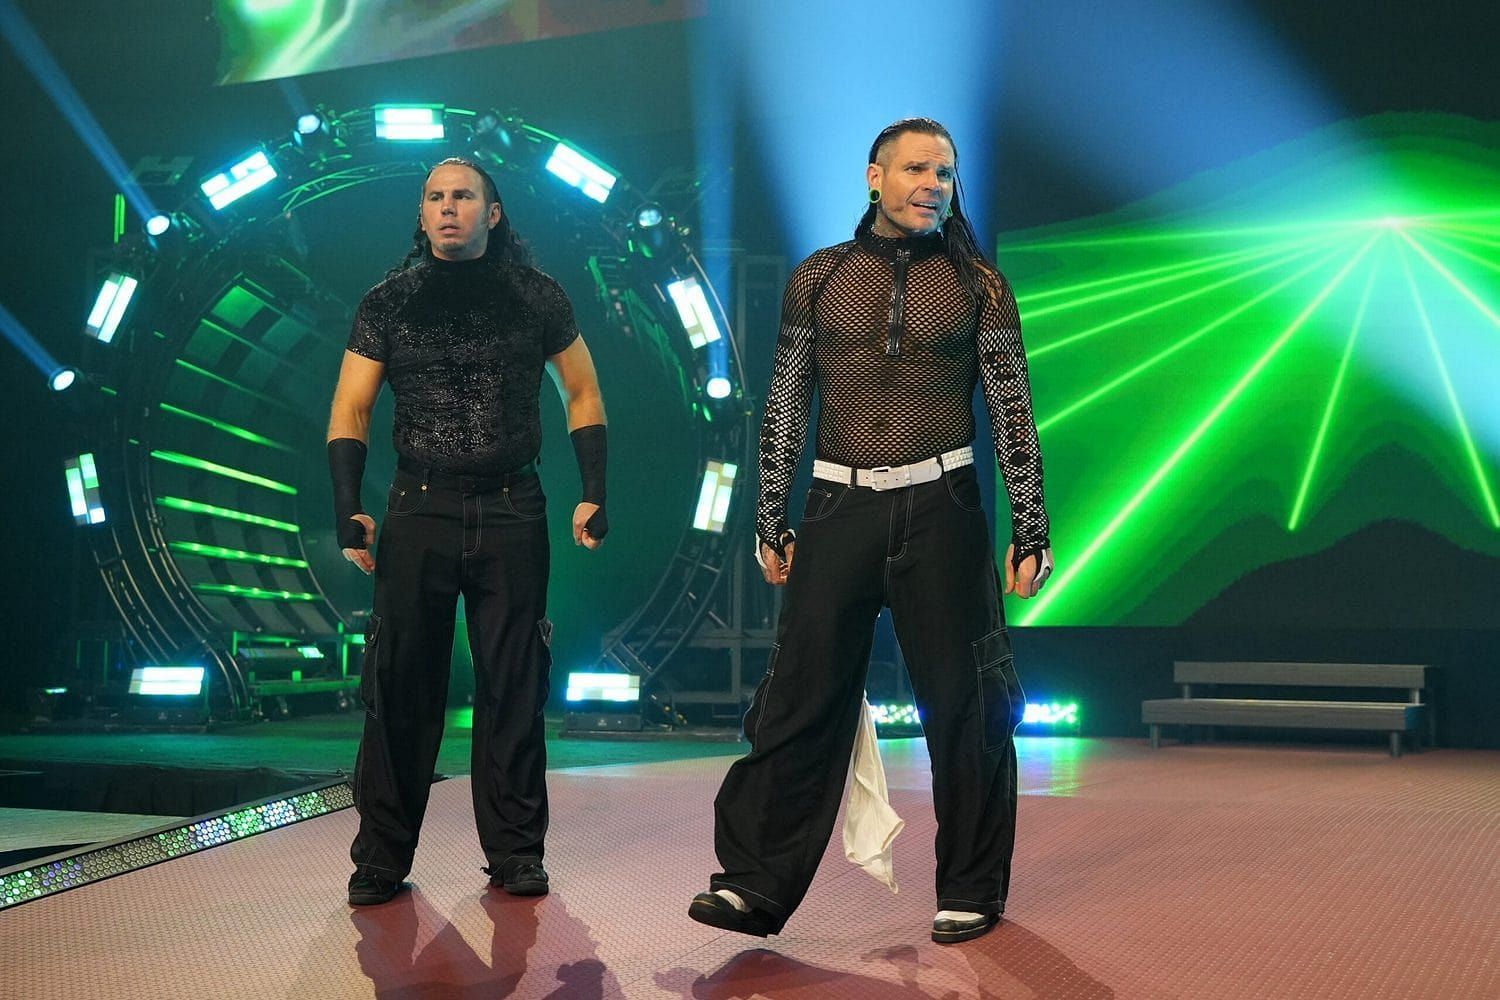 The Hardy Boyz have big plans for Forbidden Door!